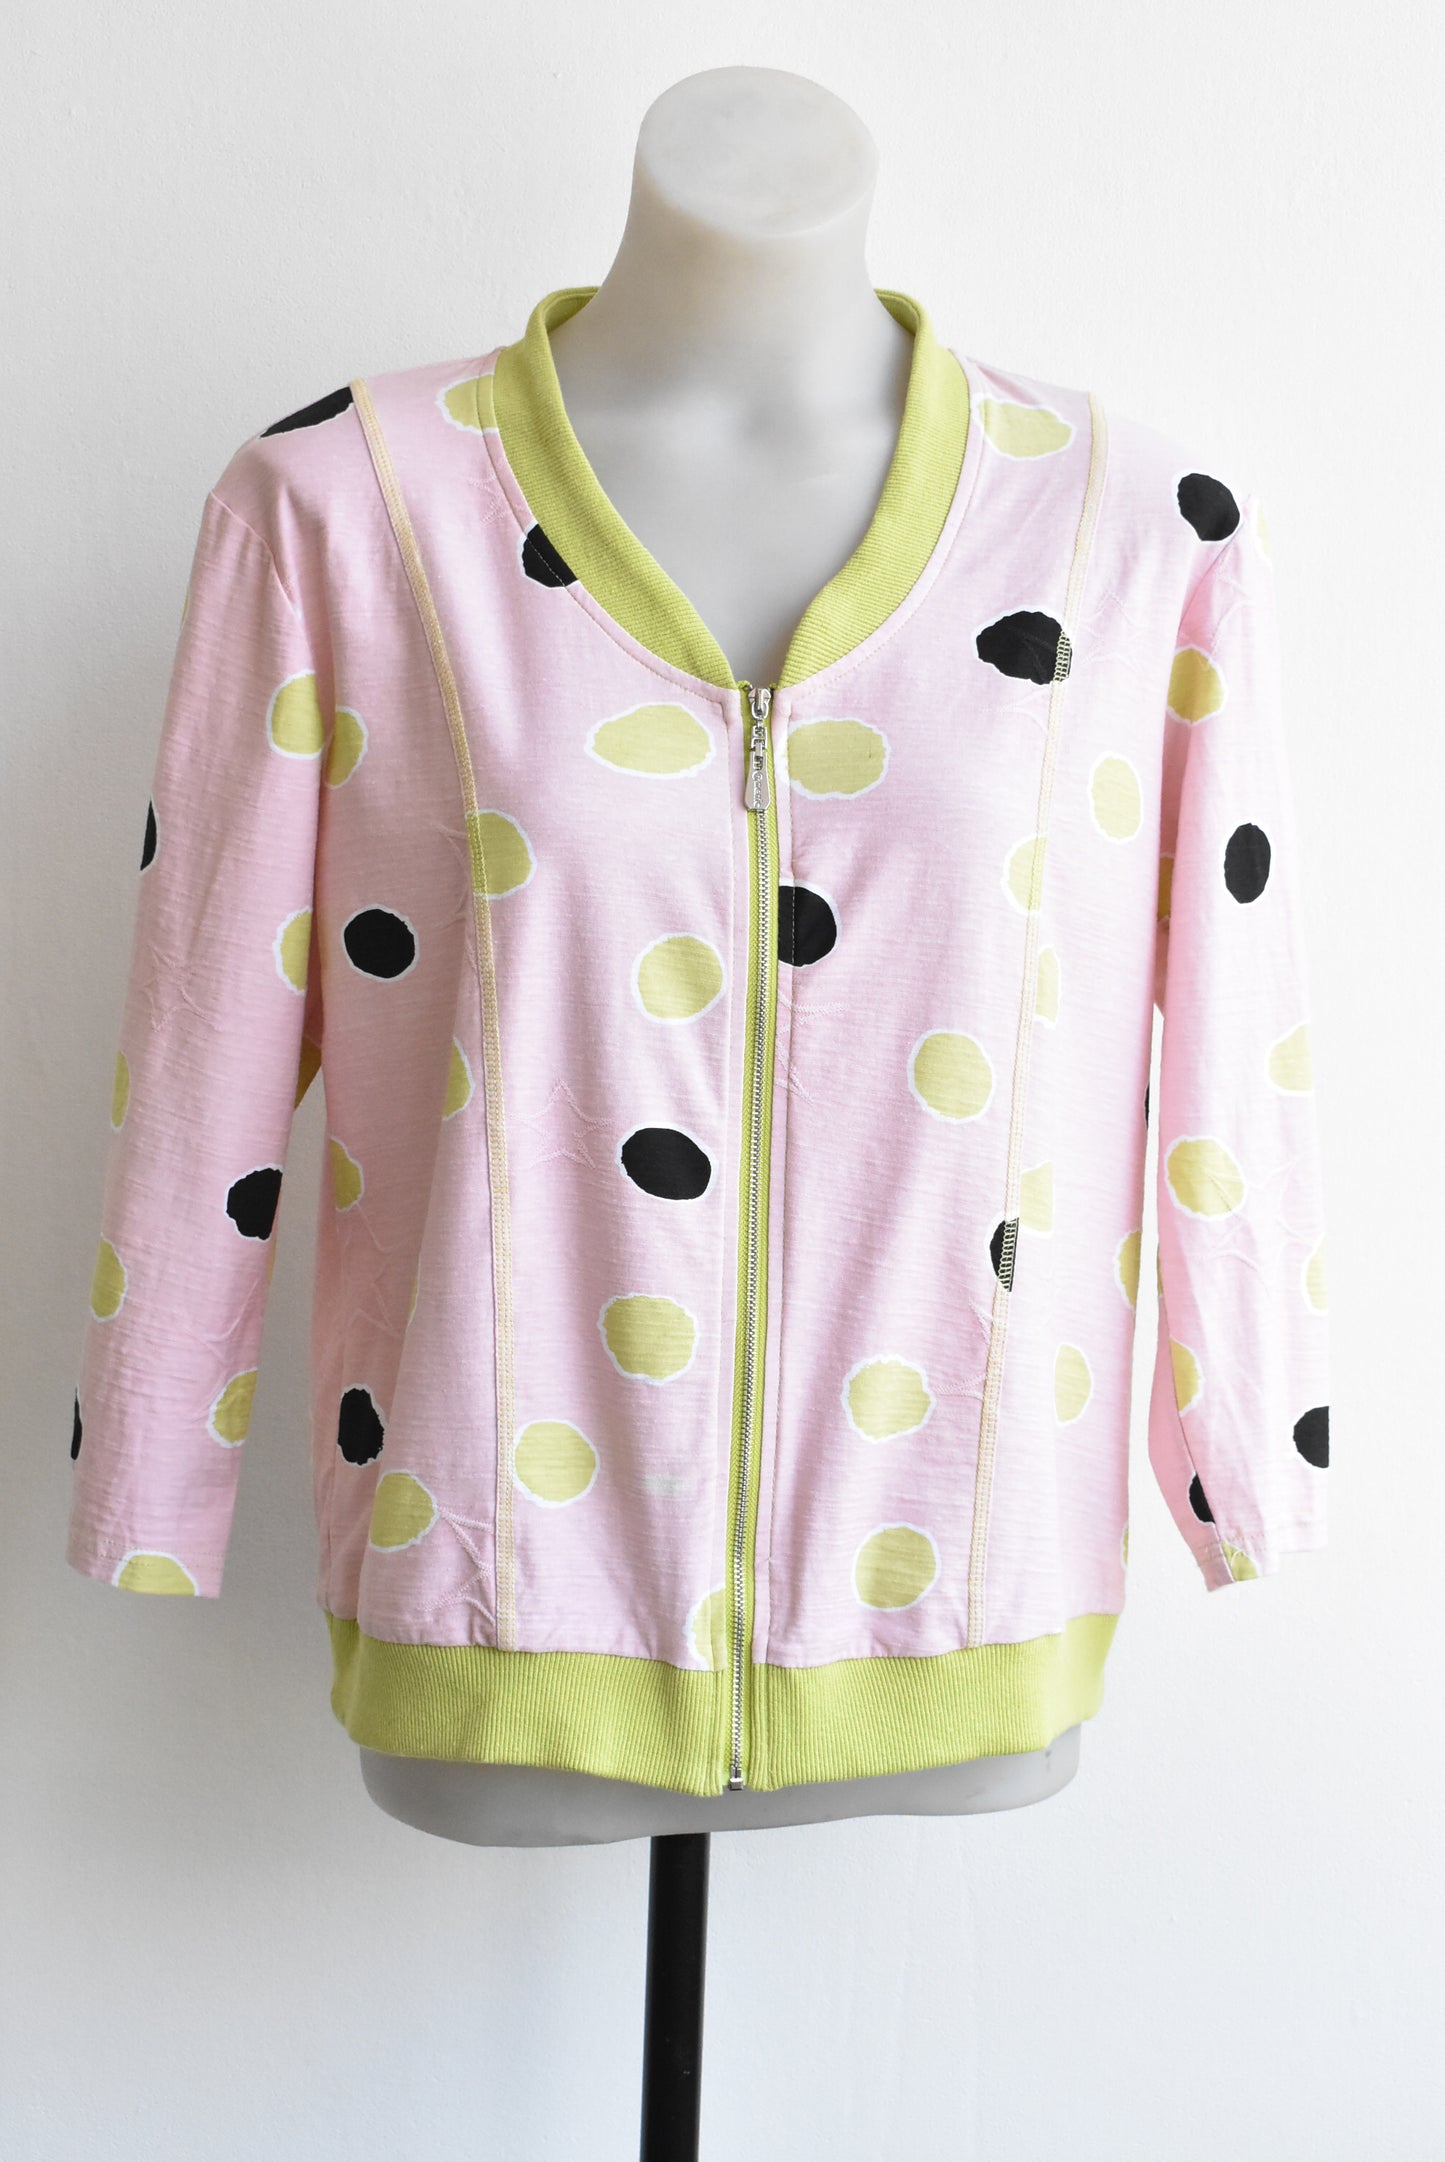 Merric pink/green circles jacket, size 8